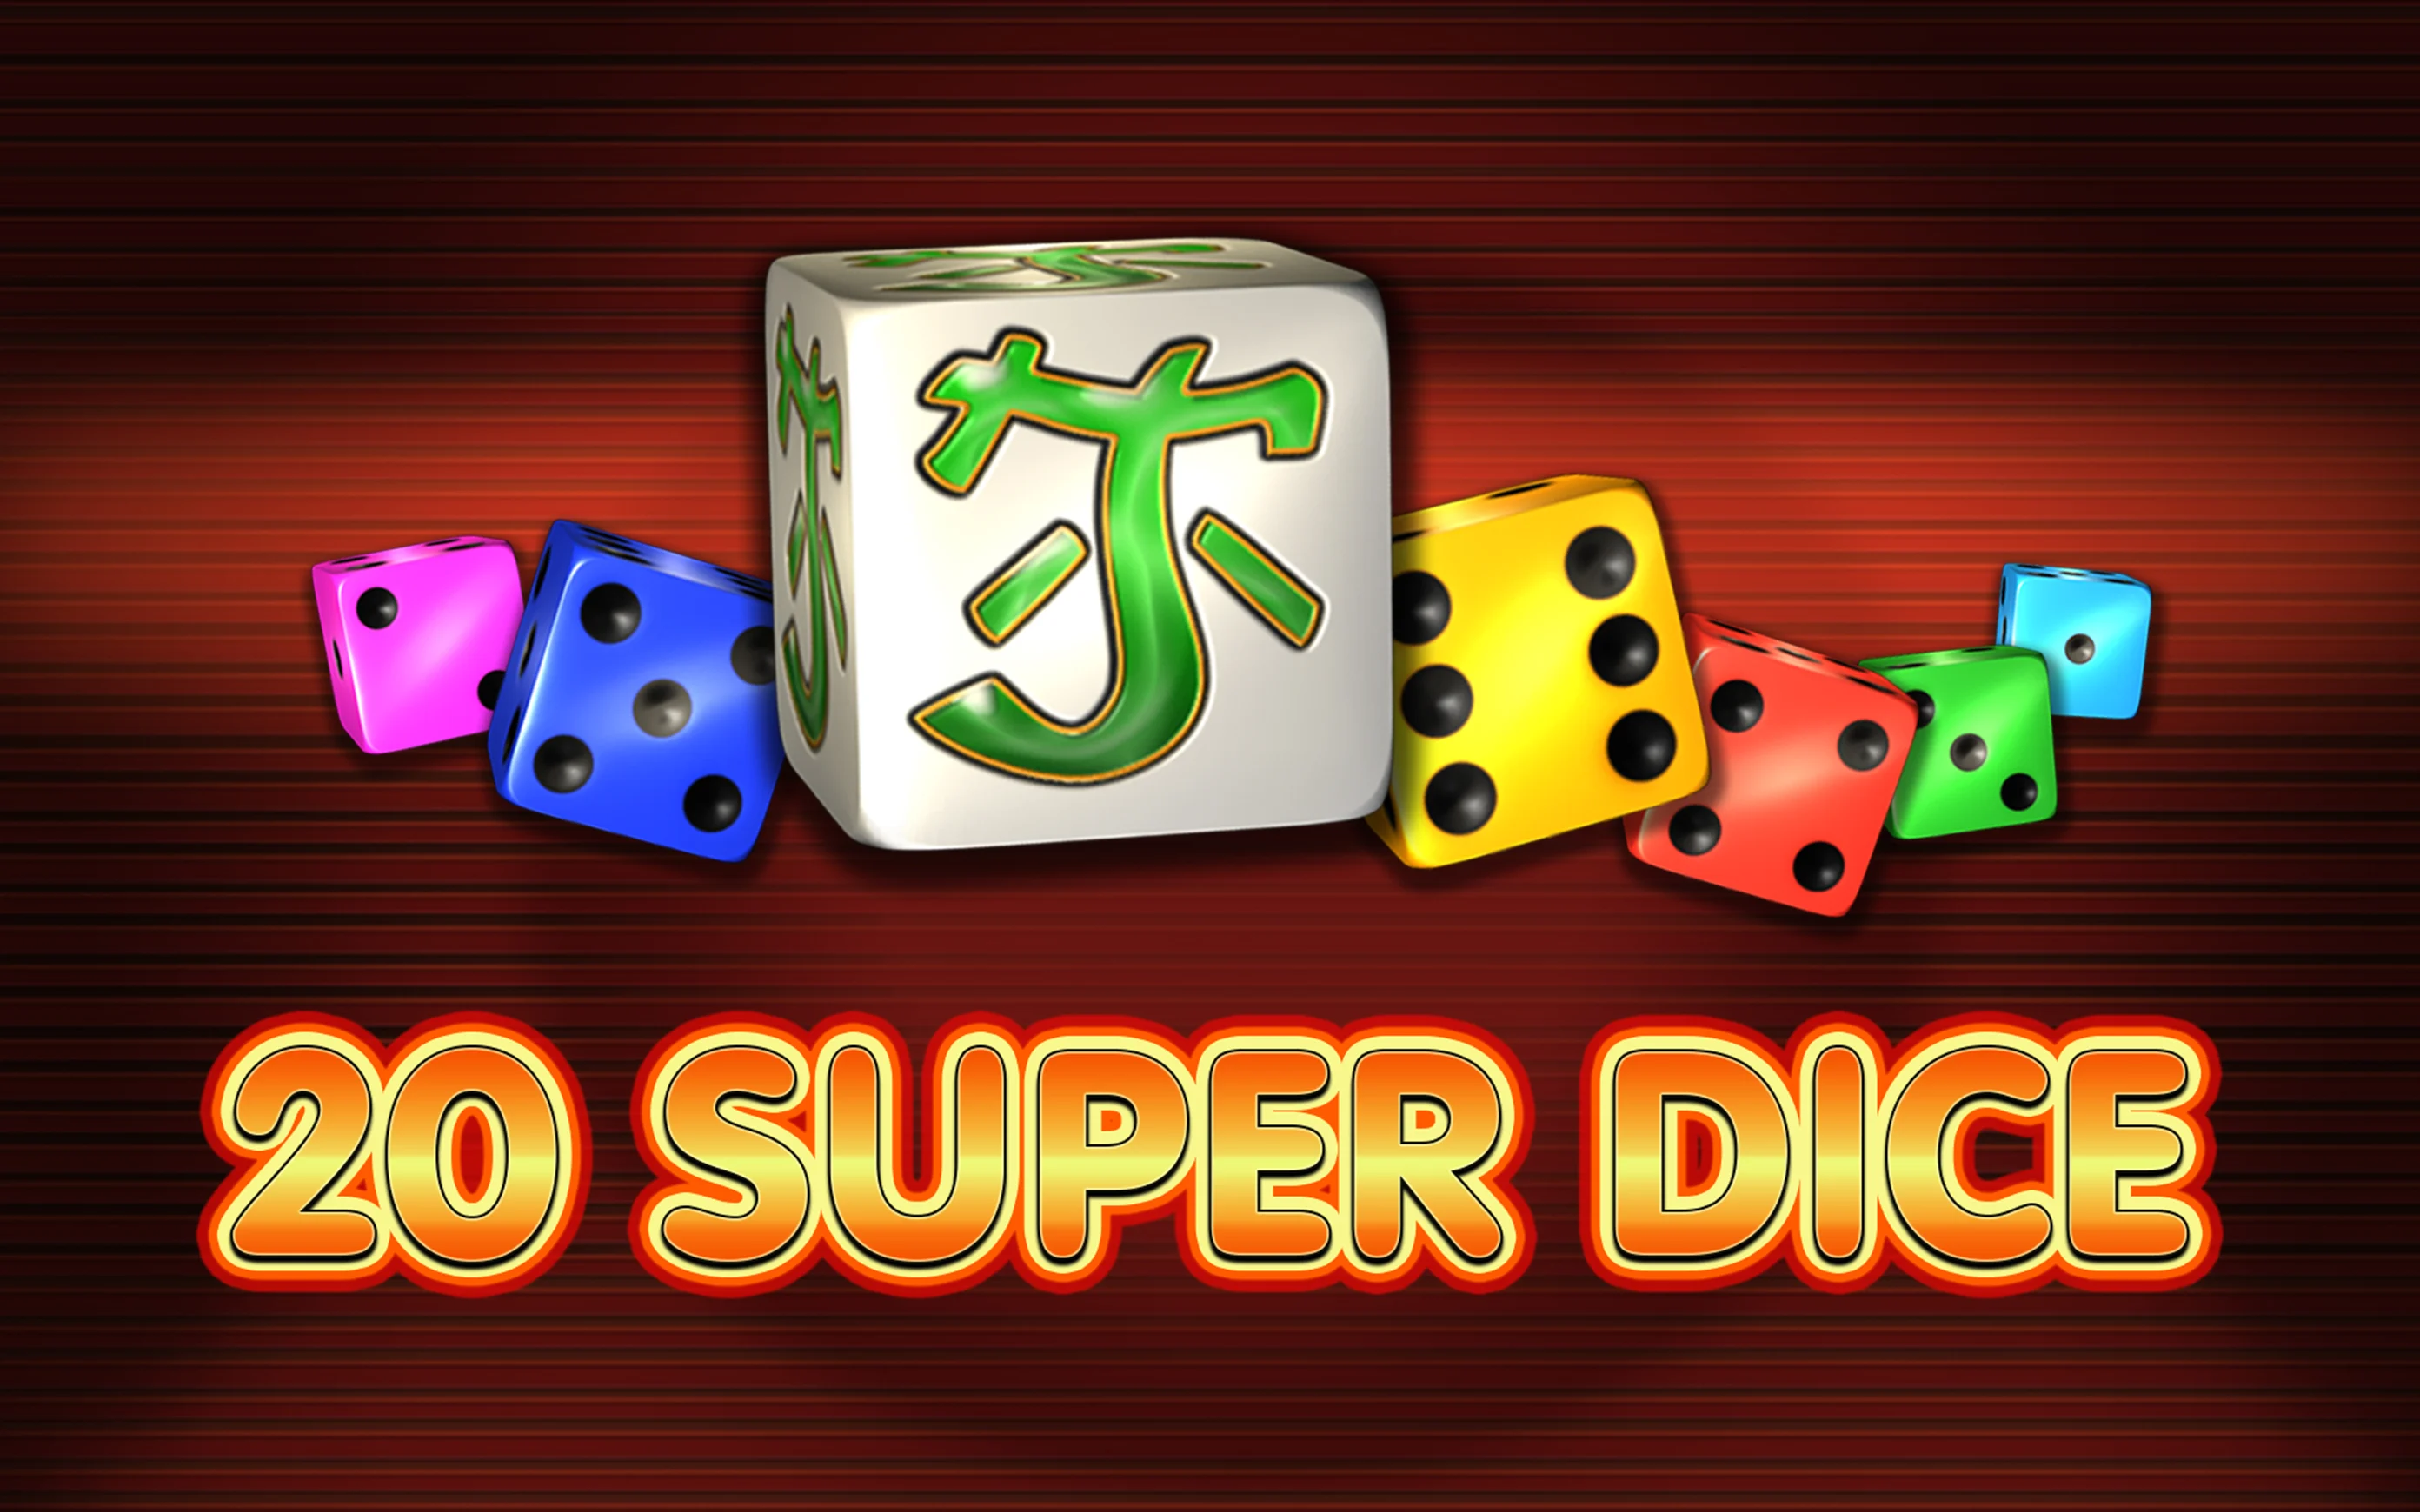 Play 20 Super Dice on Starcasino.be online casino